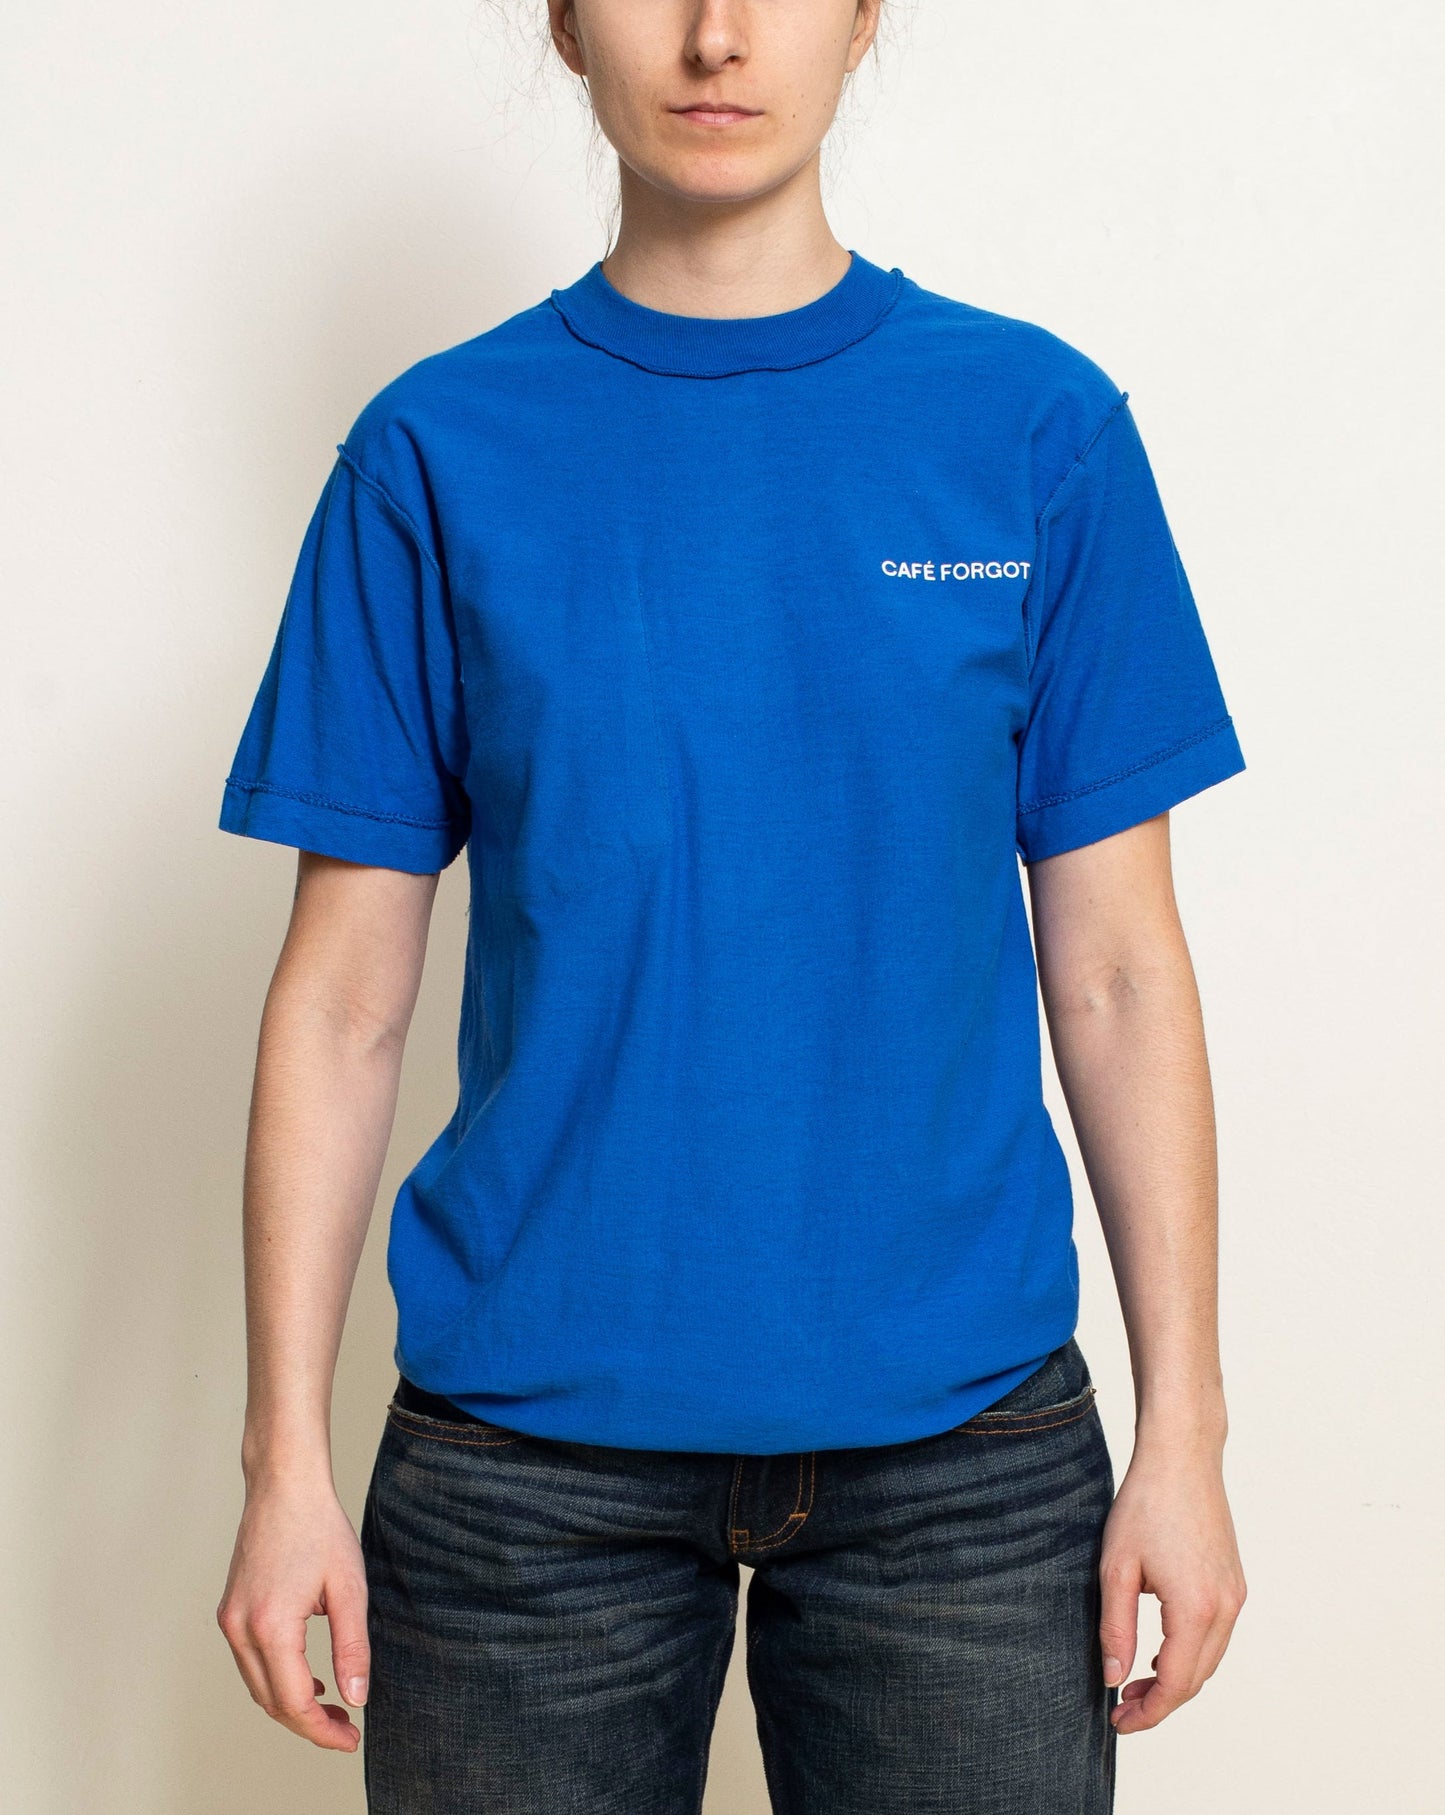 Café Forgot - Electric Blue CF T-shirt with Pocket